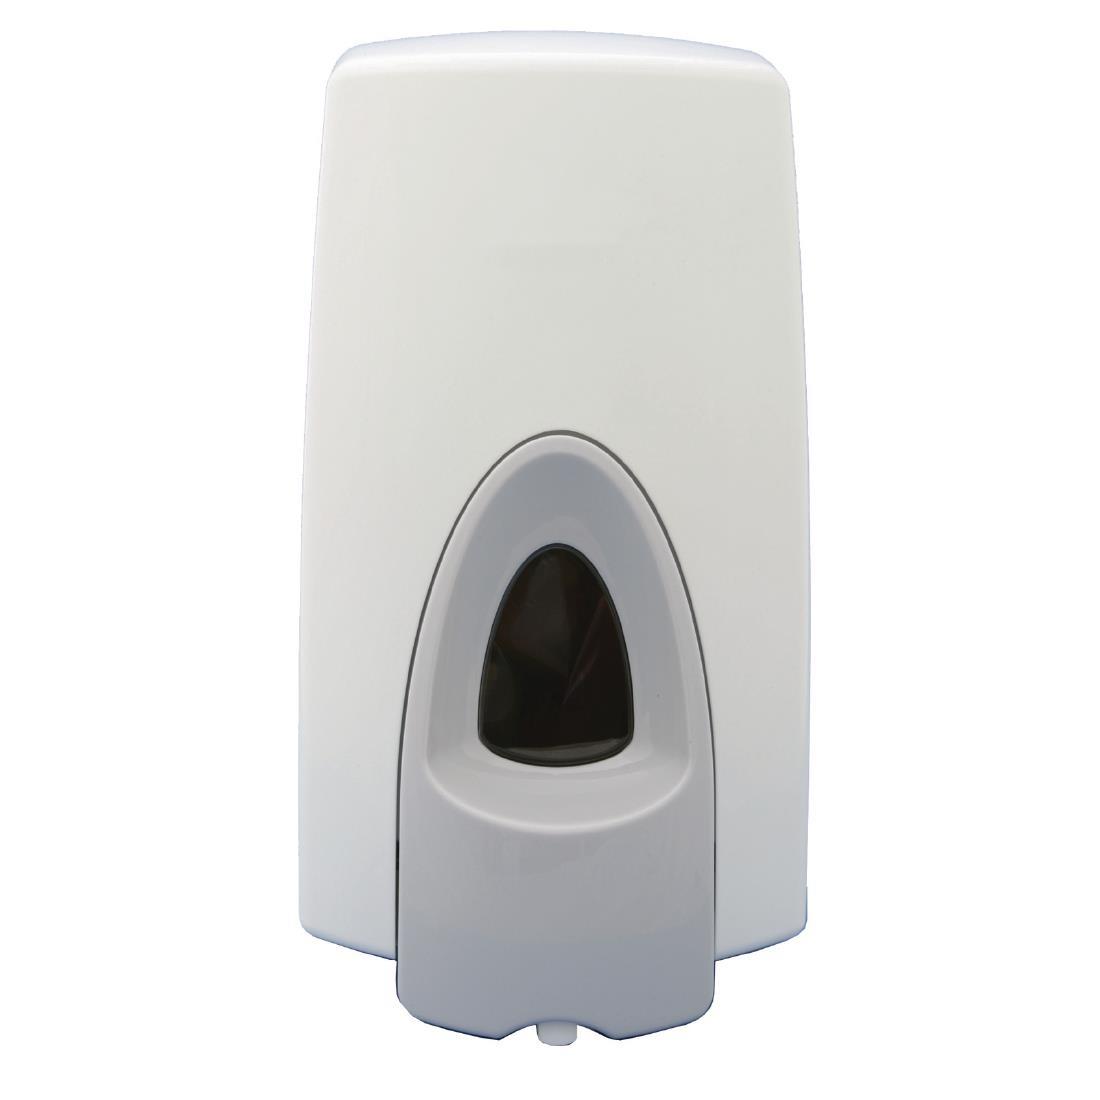 Rubbermaid Manual Foam Hand Soap Dispenser 800ml White - GD843  - 1